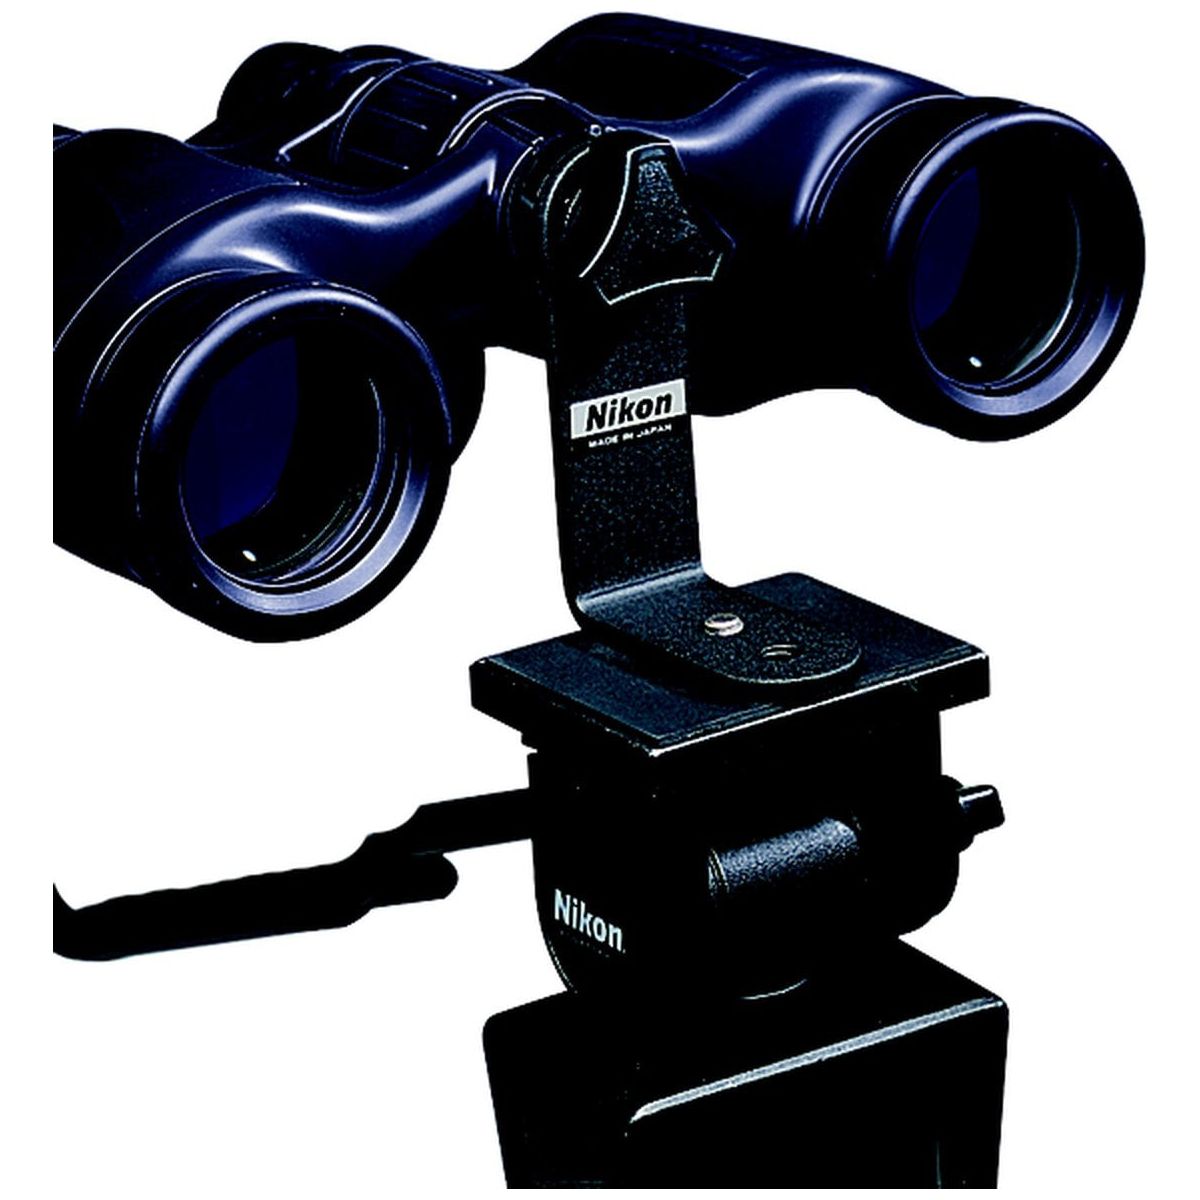 Nikon Action, Action Extreme, and Marine Series Binocular Tripod Adaptor